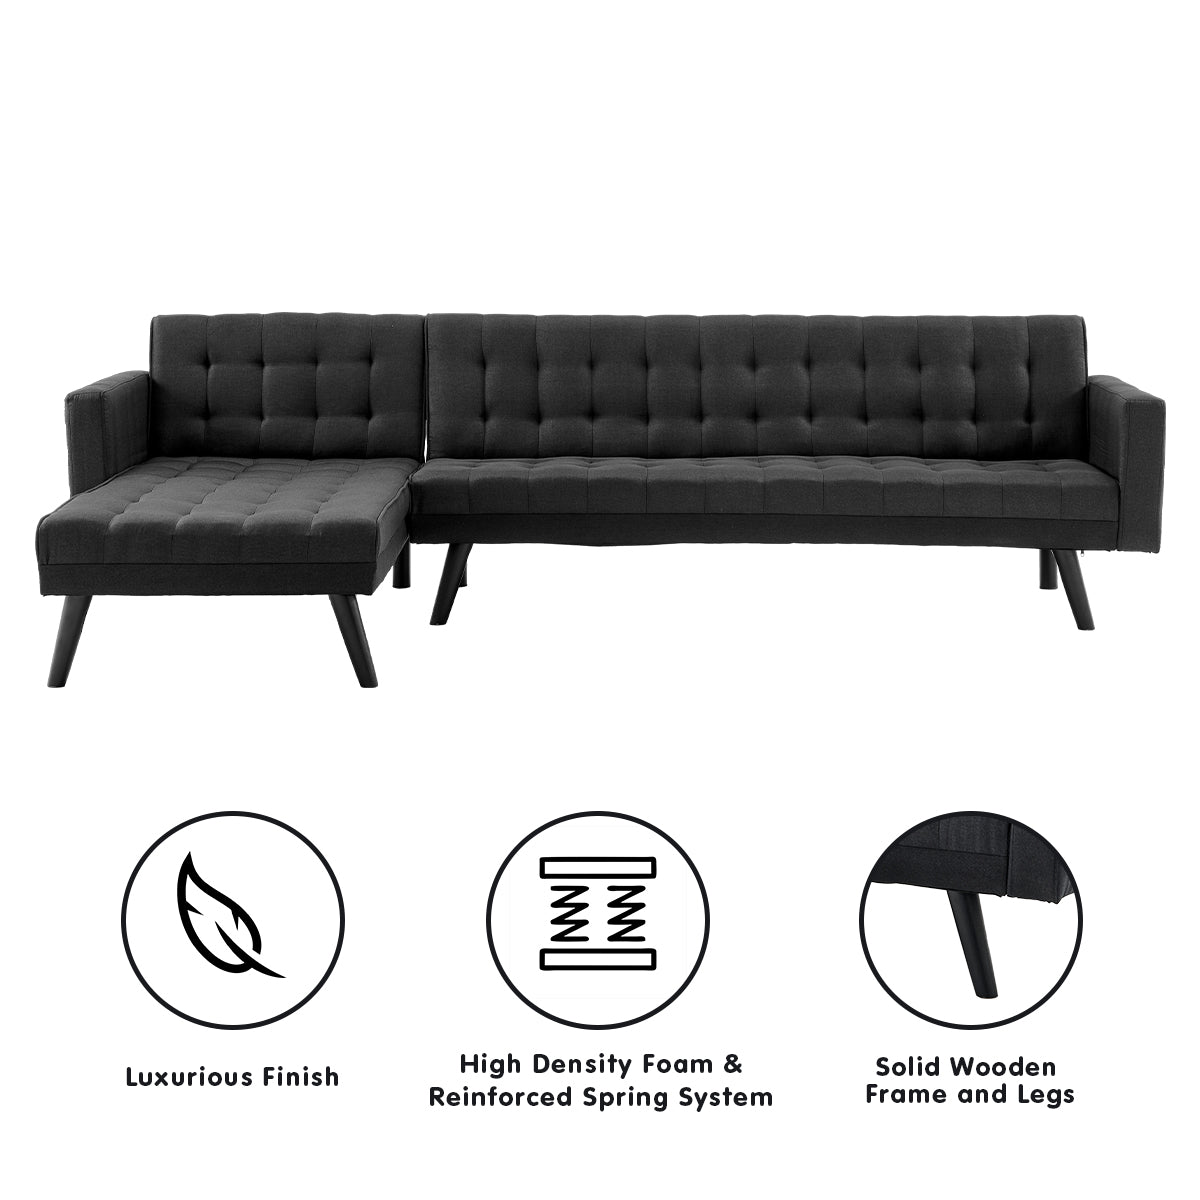 Sarantino 3-Seater Corner Wooden Sofa Bed Lounge Chaise Sofa Black - 0